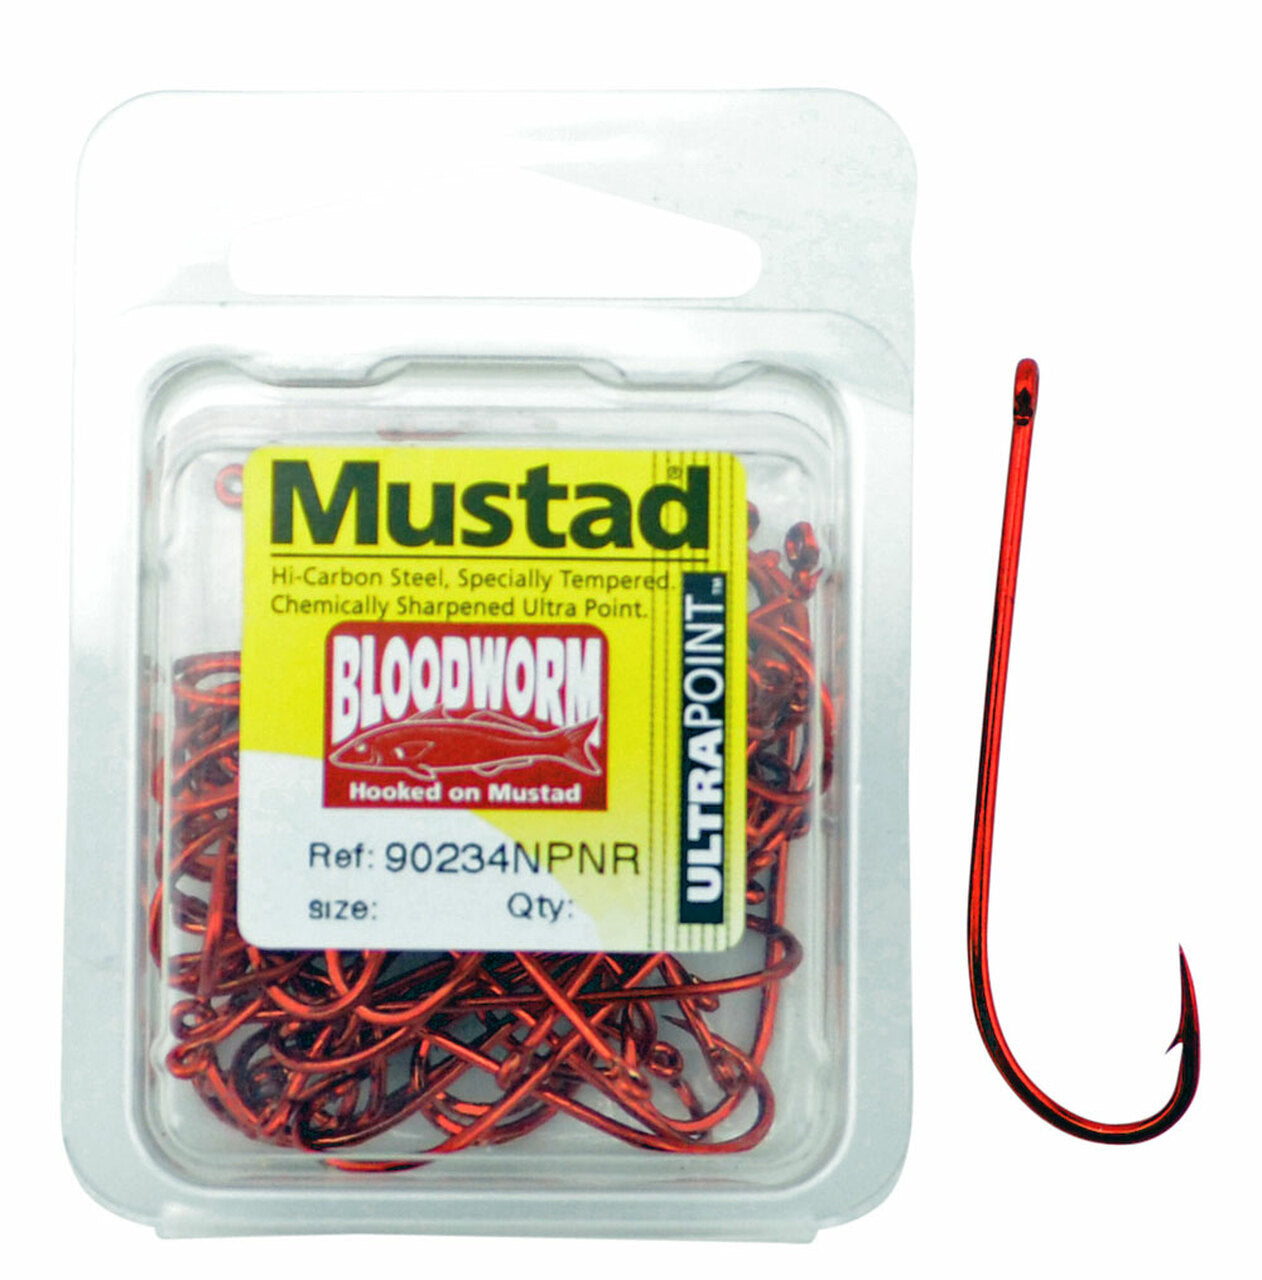 Mustad Hook Bloodworm Sz 2 Qty 50